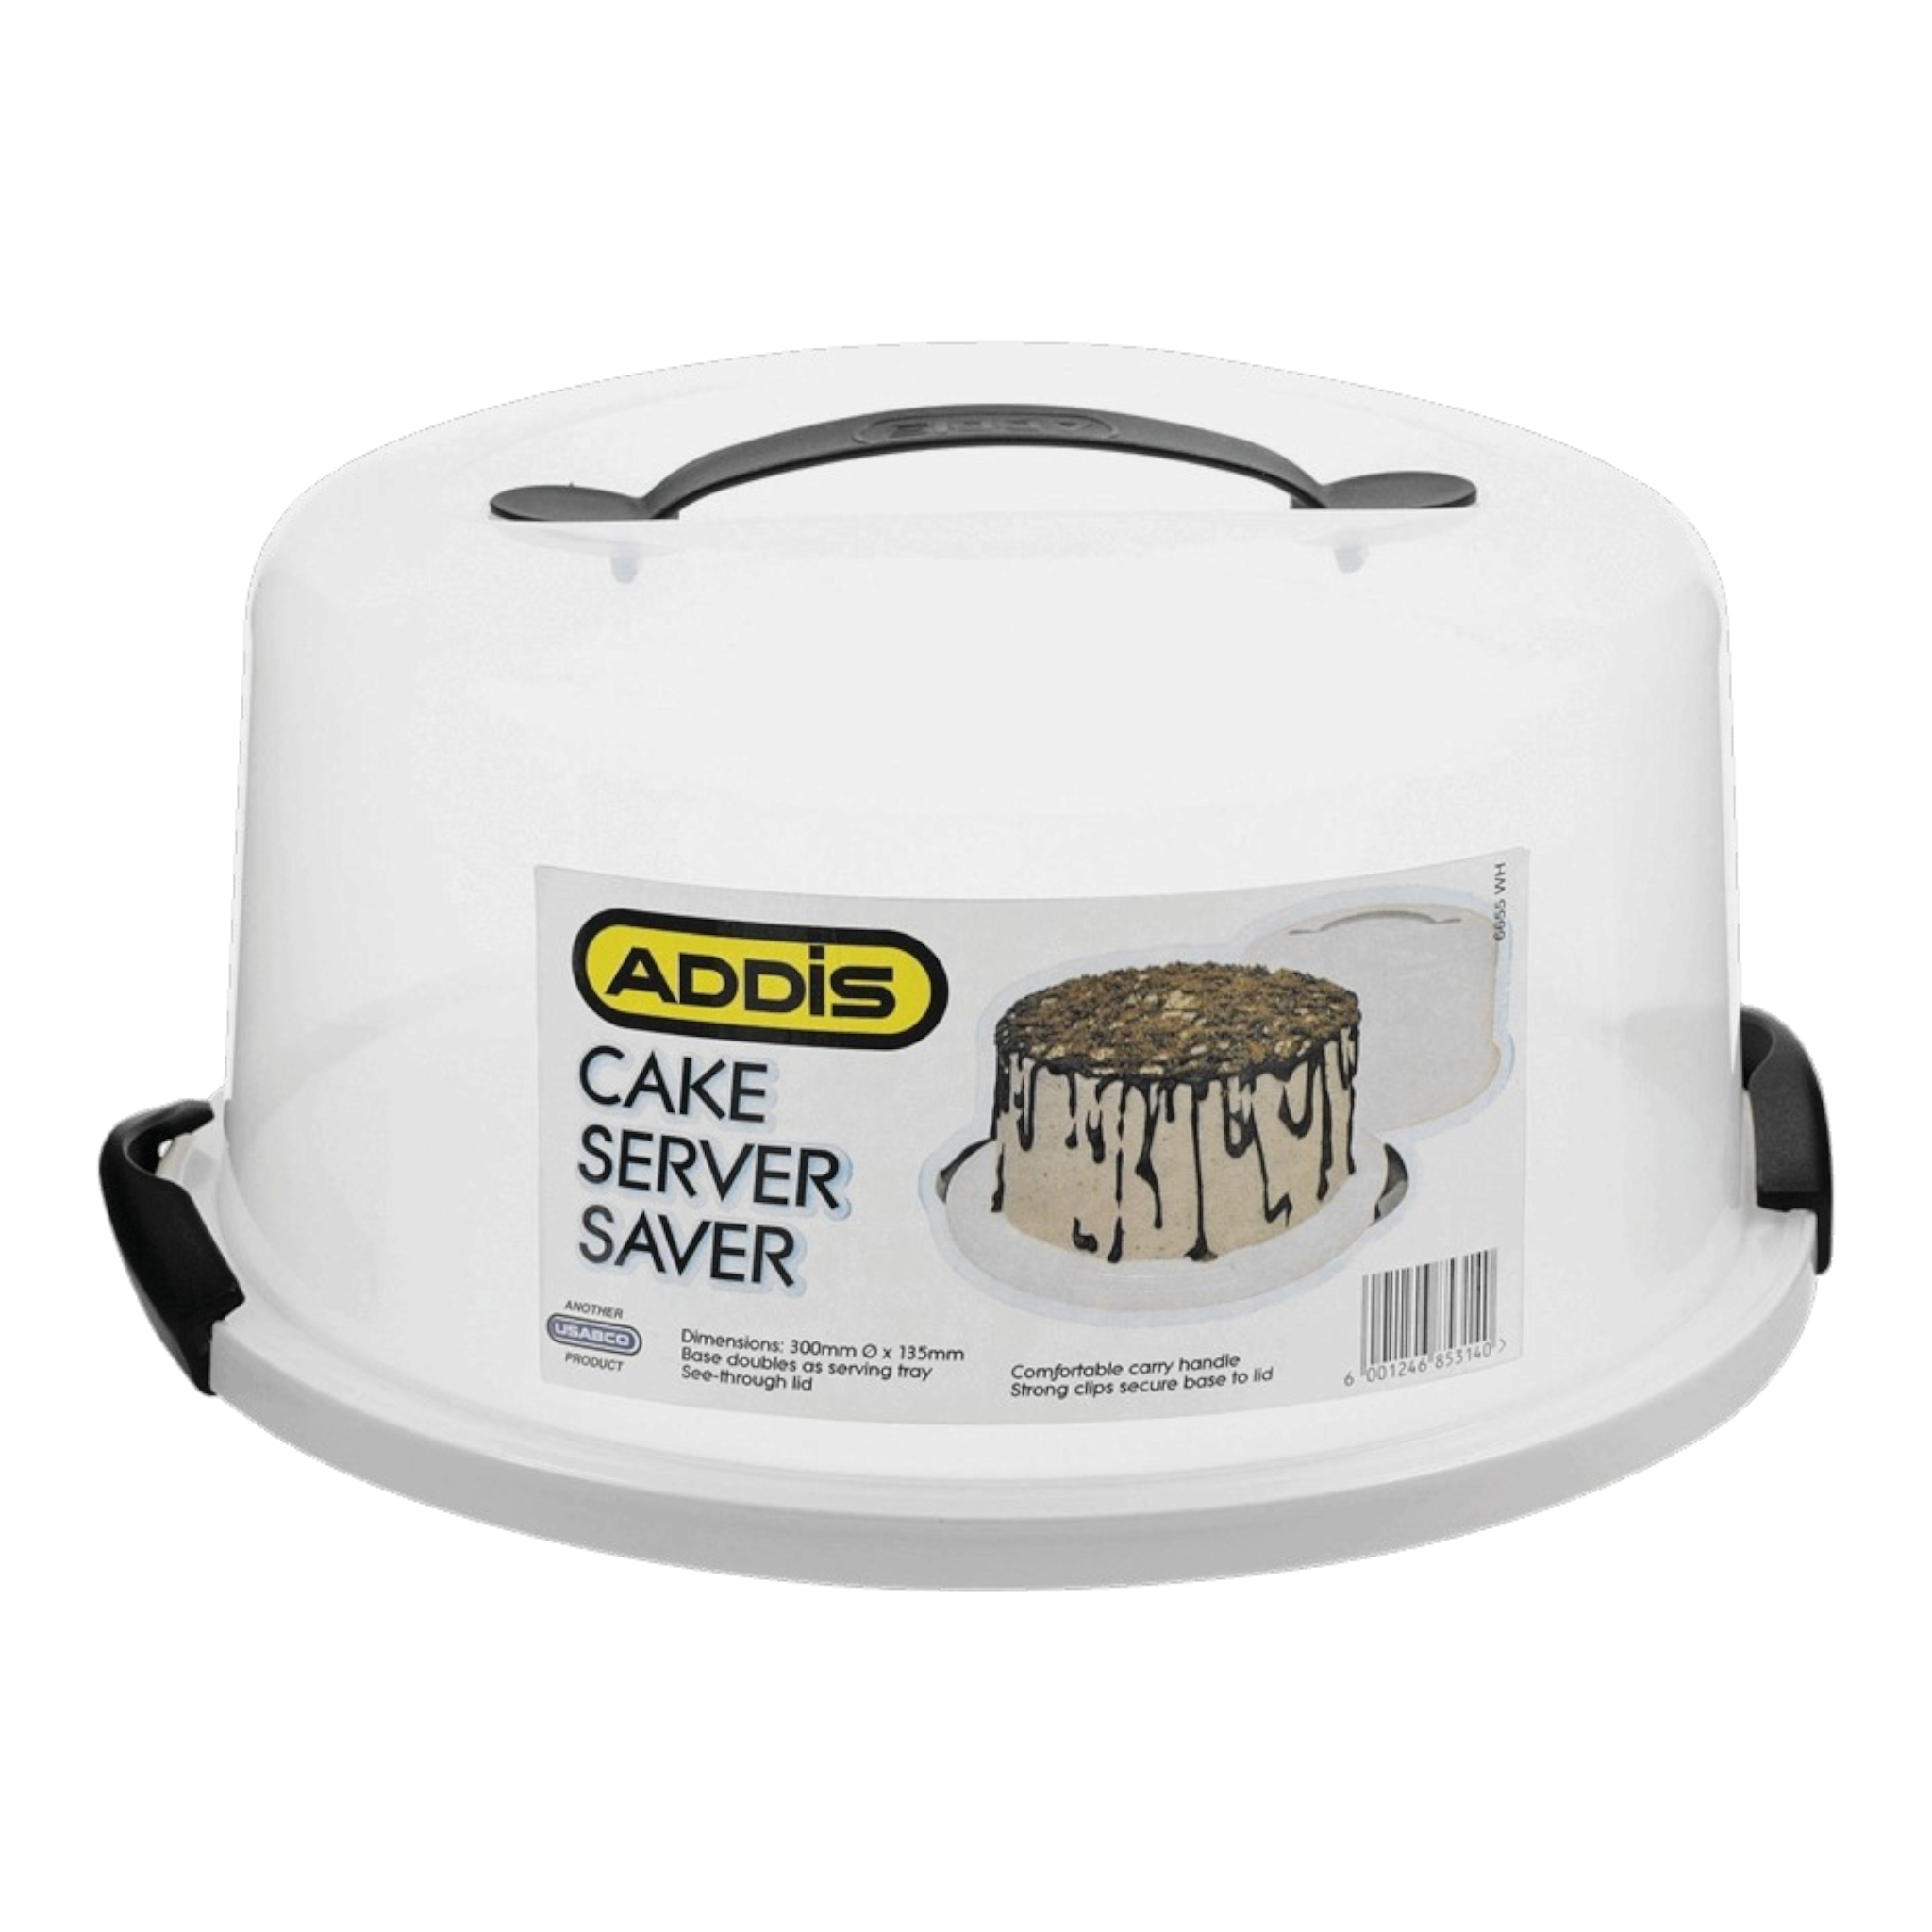 Adddis Cake Server Saver Small 300x135mm with Dome 6655